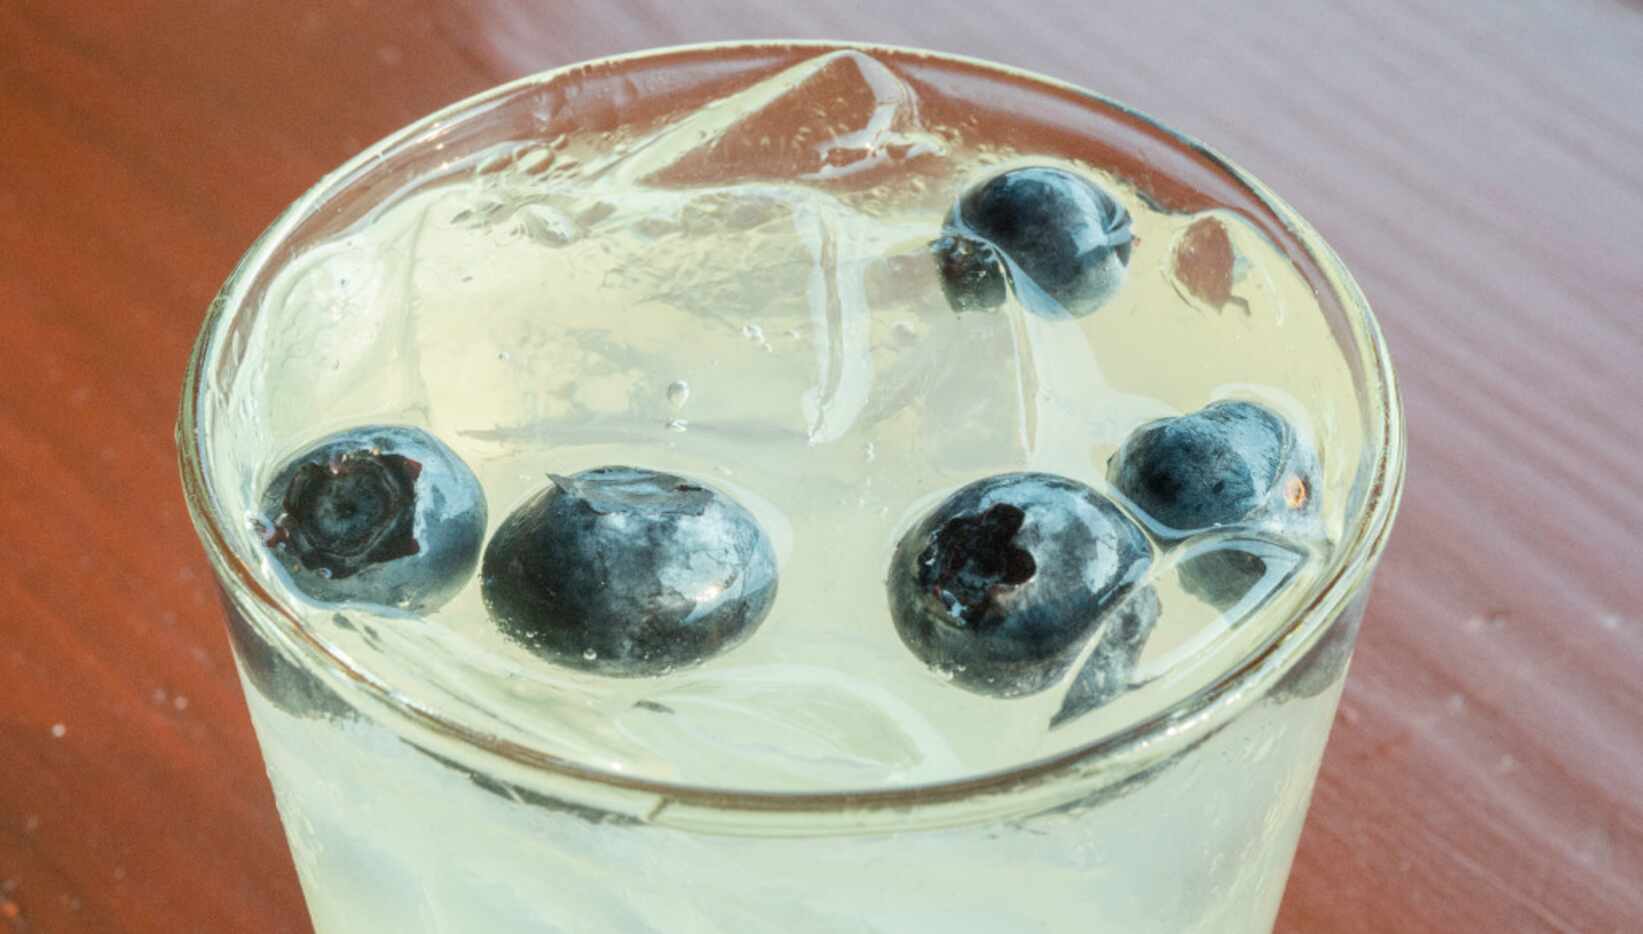 The Back Seat Bingo cocktail at Stellar features Smirnoff blueberry vodka, lemonade,...